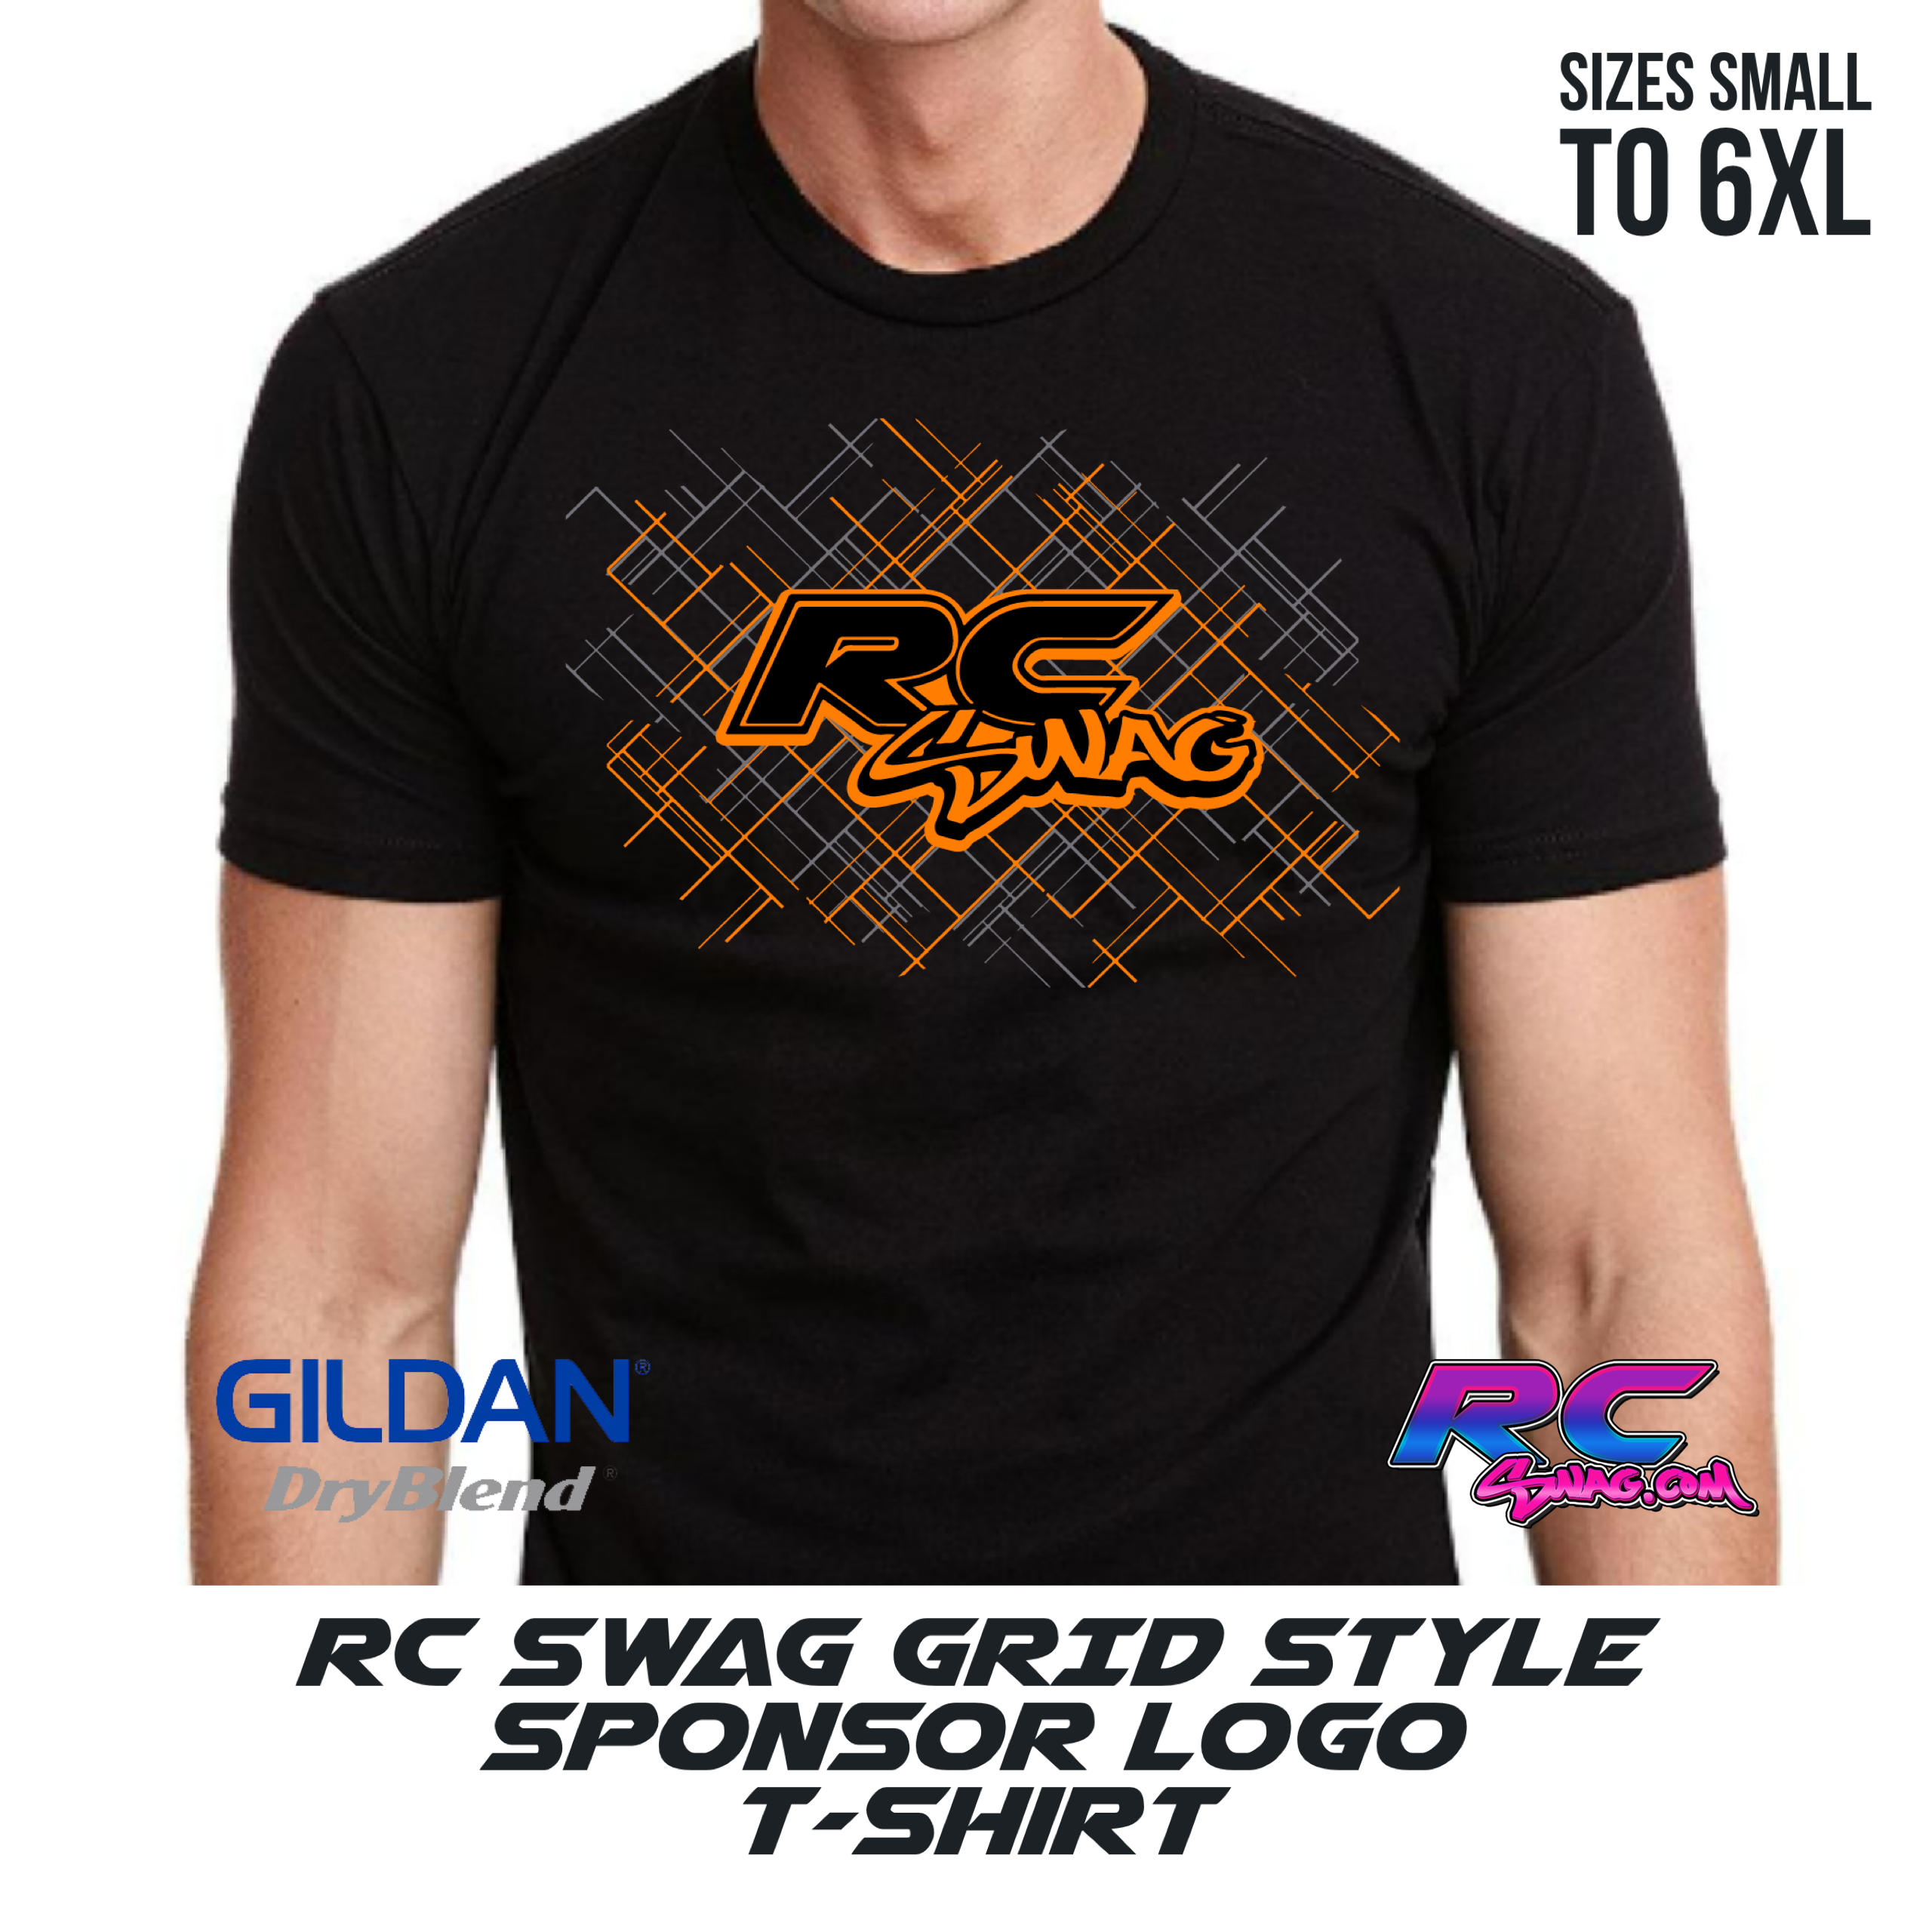 RC SWAG - RC SWAG - Stickers, T-Shirts, Hoodies, RC Kits & More!